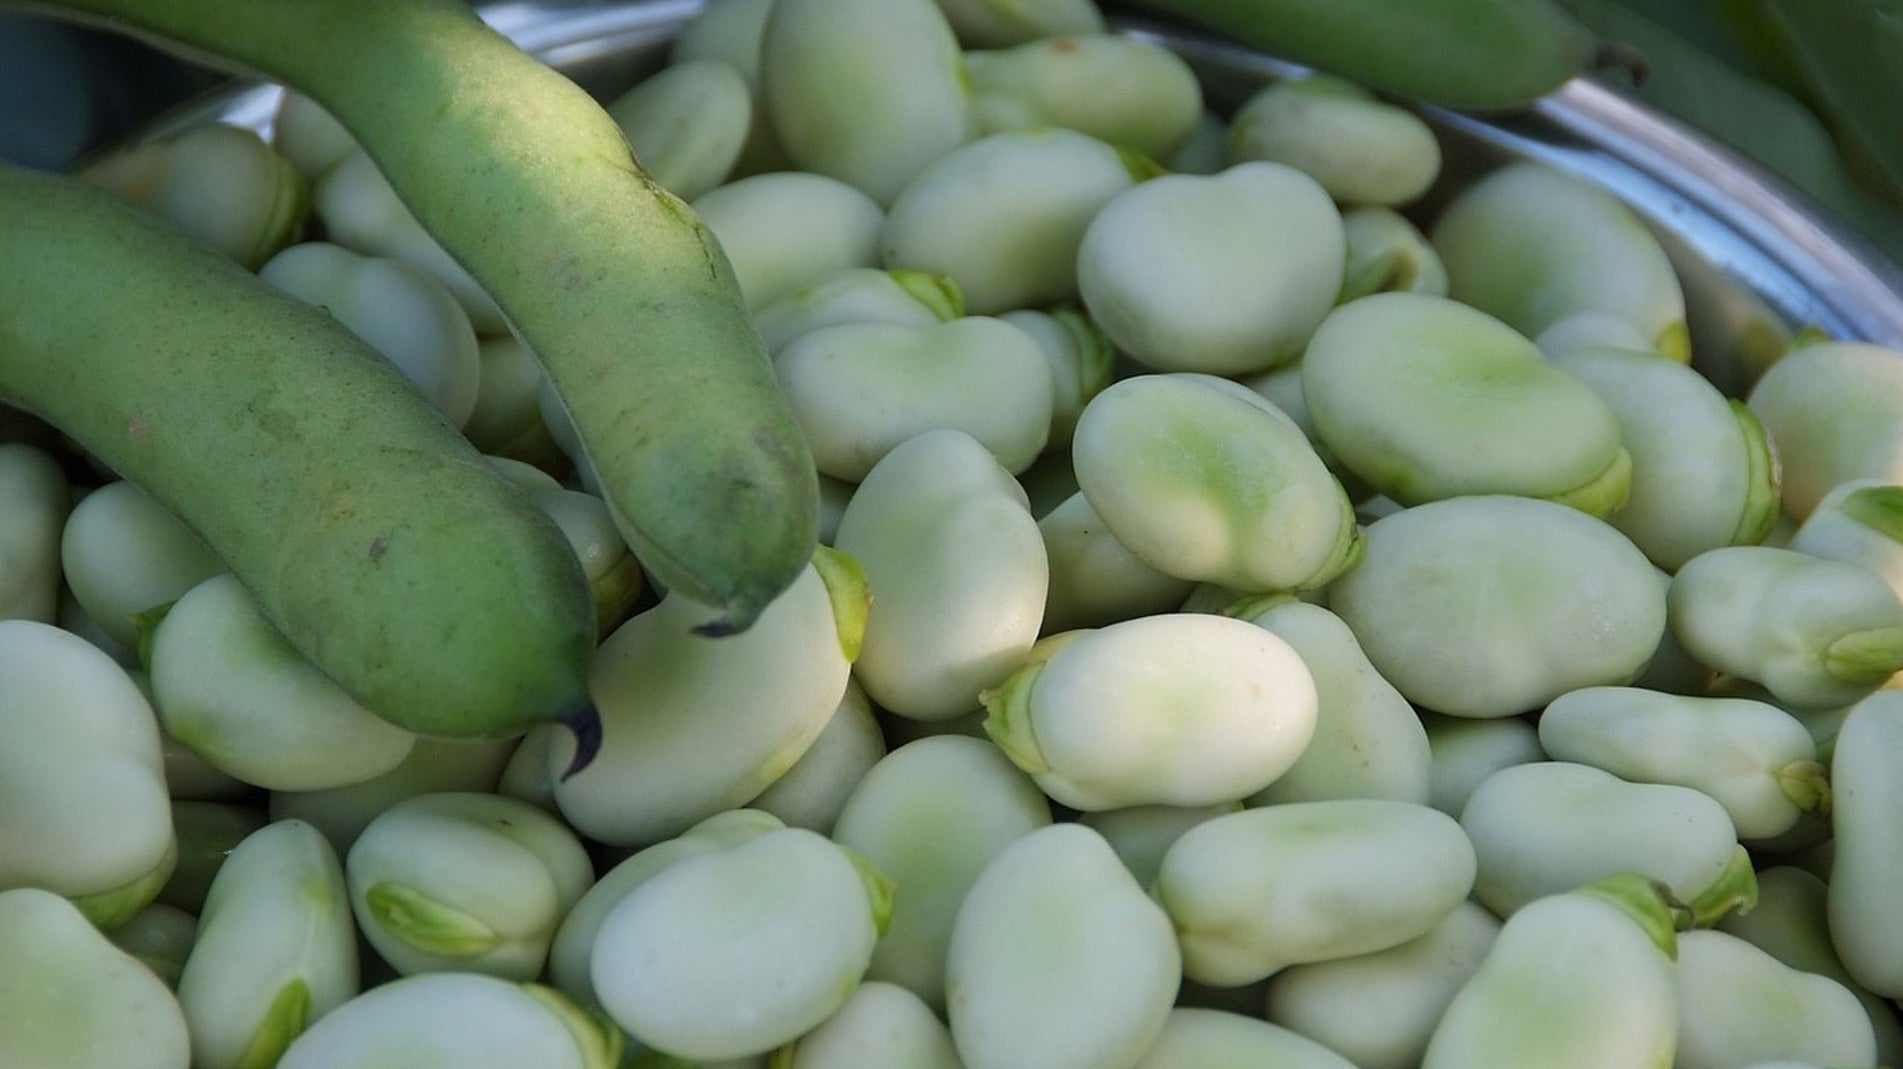 The best way to grow broad beans in Haxnicks Vigoroot pots